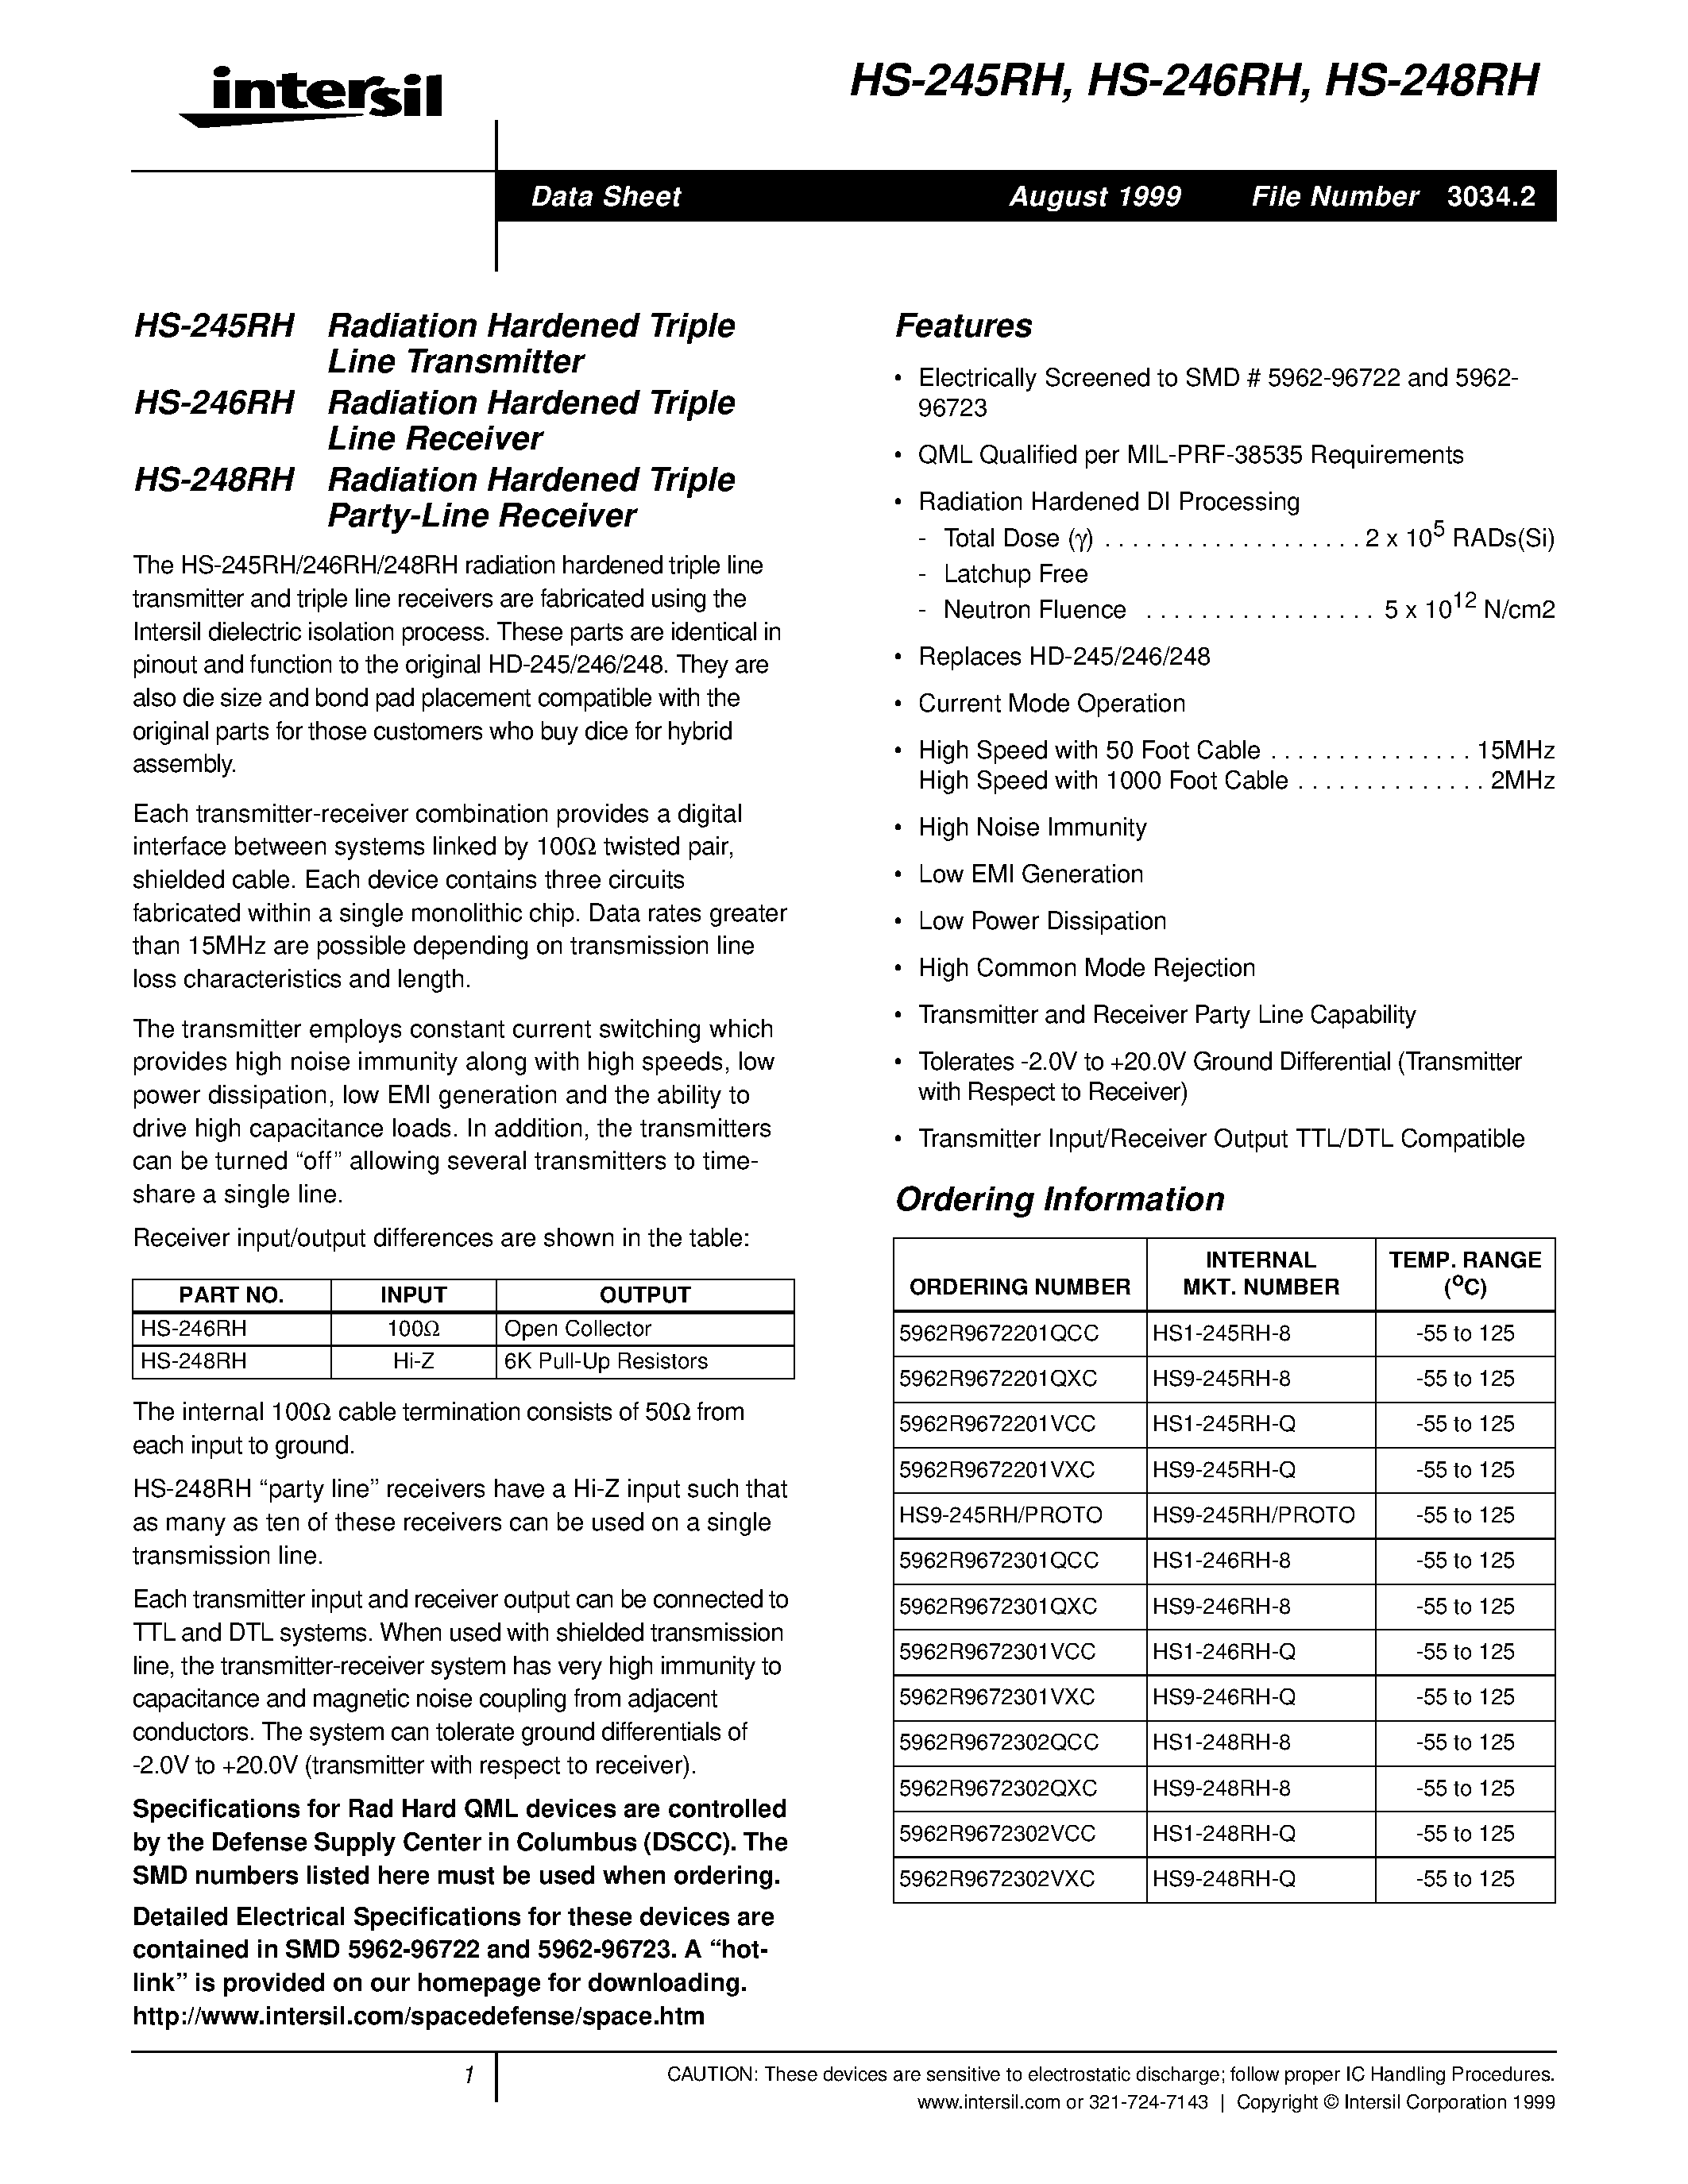 Даташит HS1-246RH-Q - Radiation Hardened Triple Line(party-Line) Transmitter страница 1